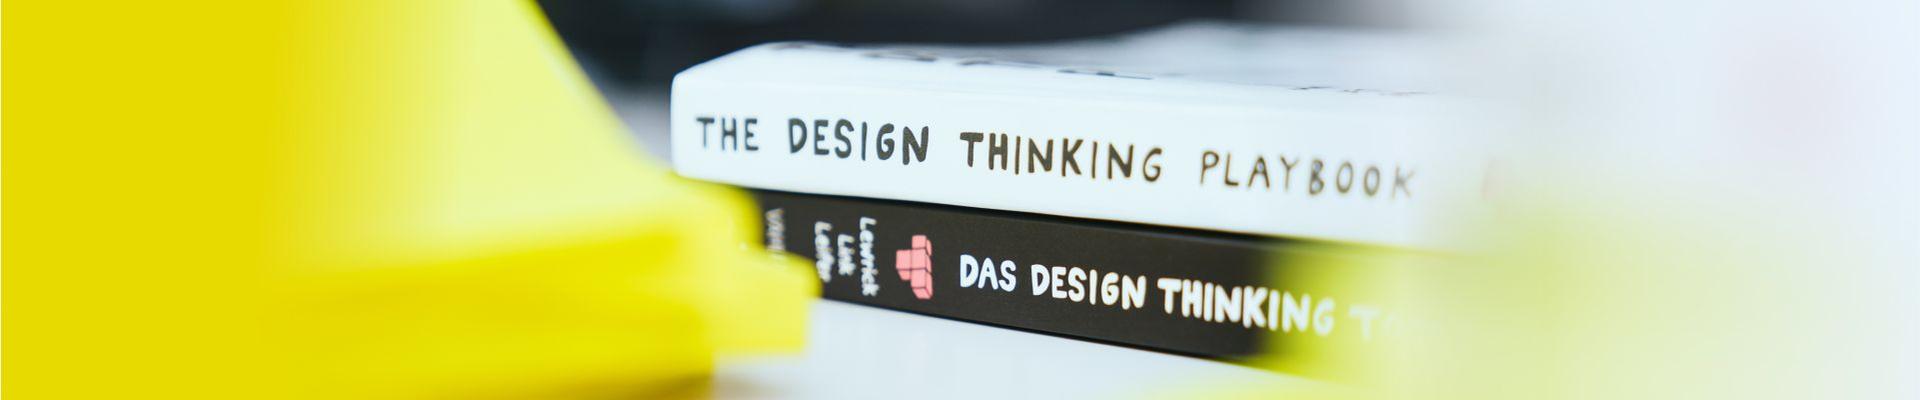 Design Thinking Playbooks im Fokus 